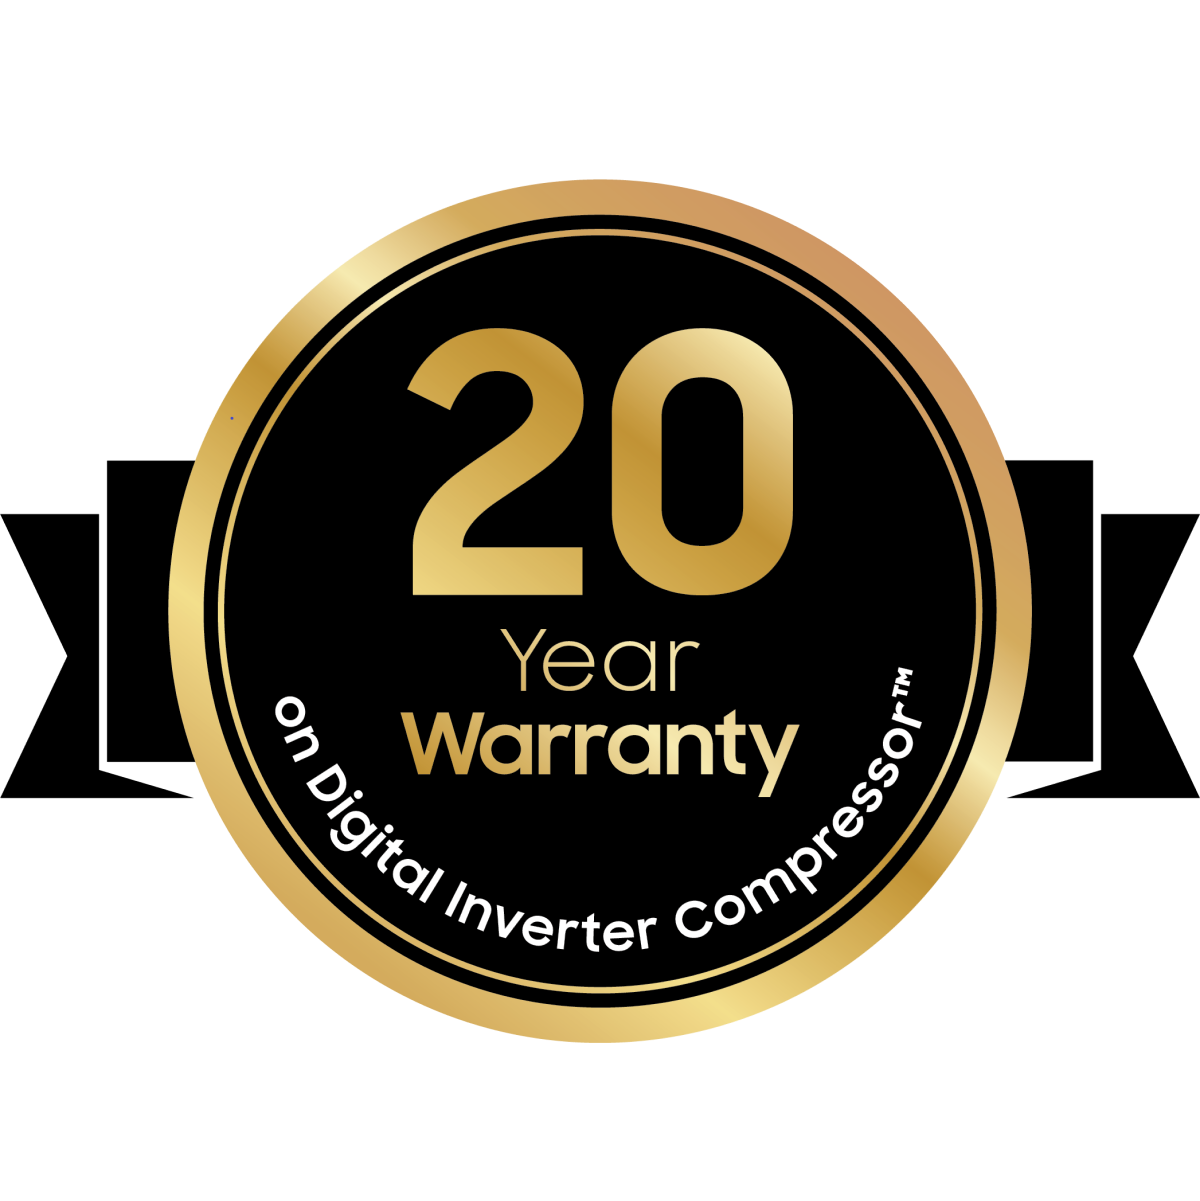 20 Year Warranty logo